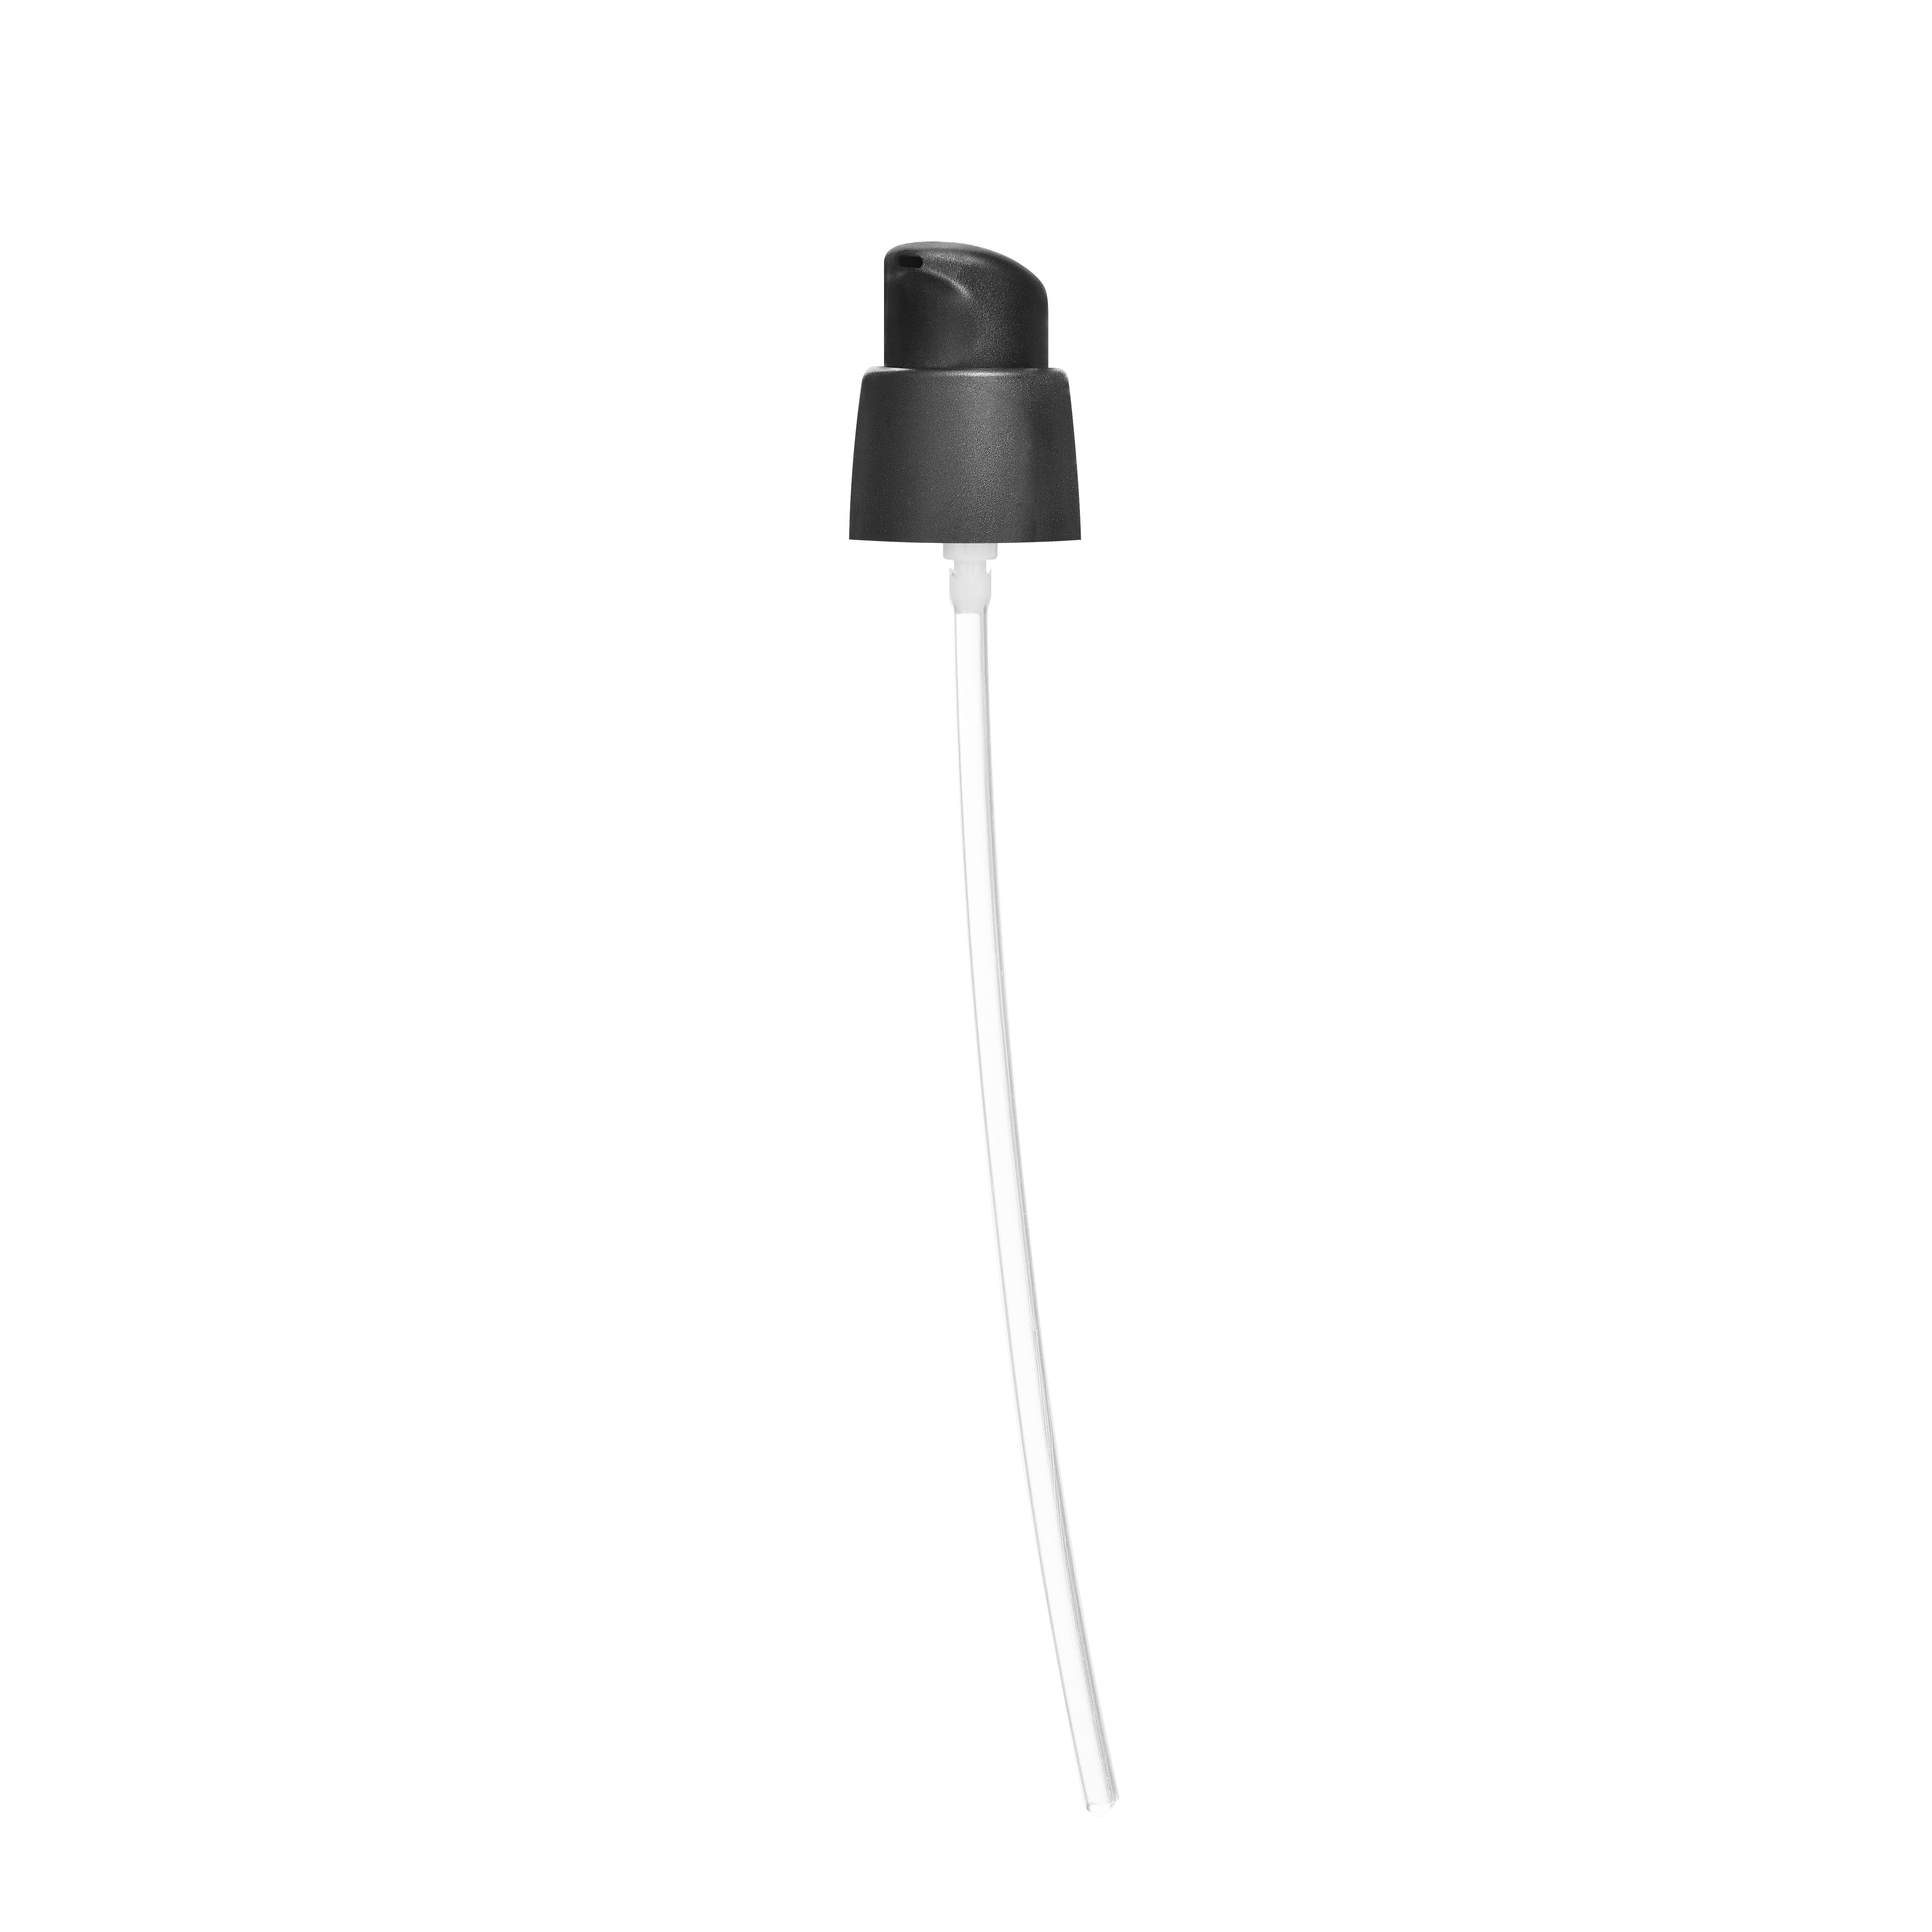 Lotion pump Evolution 18/400, PP, black, matte finish, dose 0.15ml, black security clip (Willow 15)